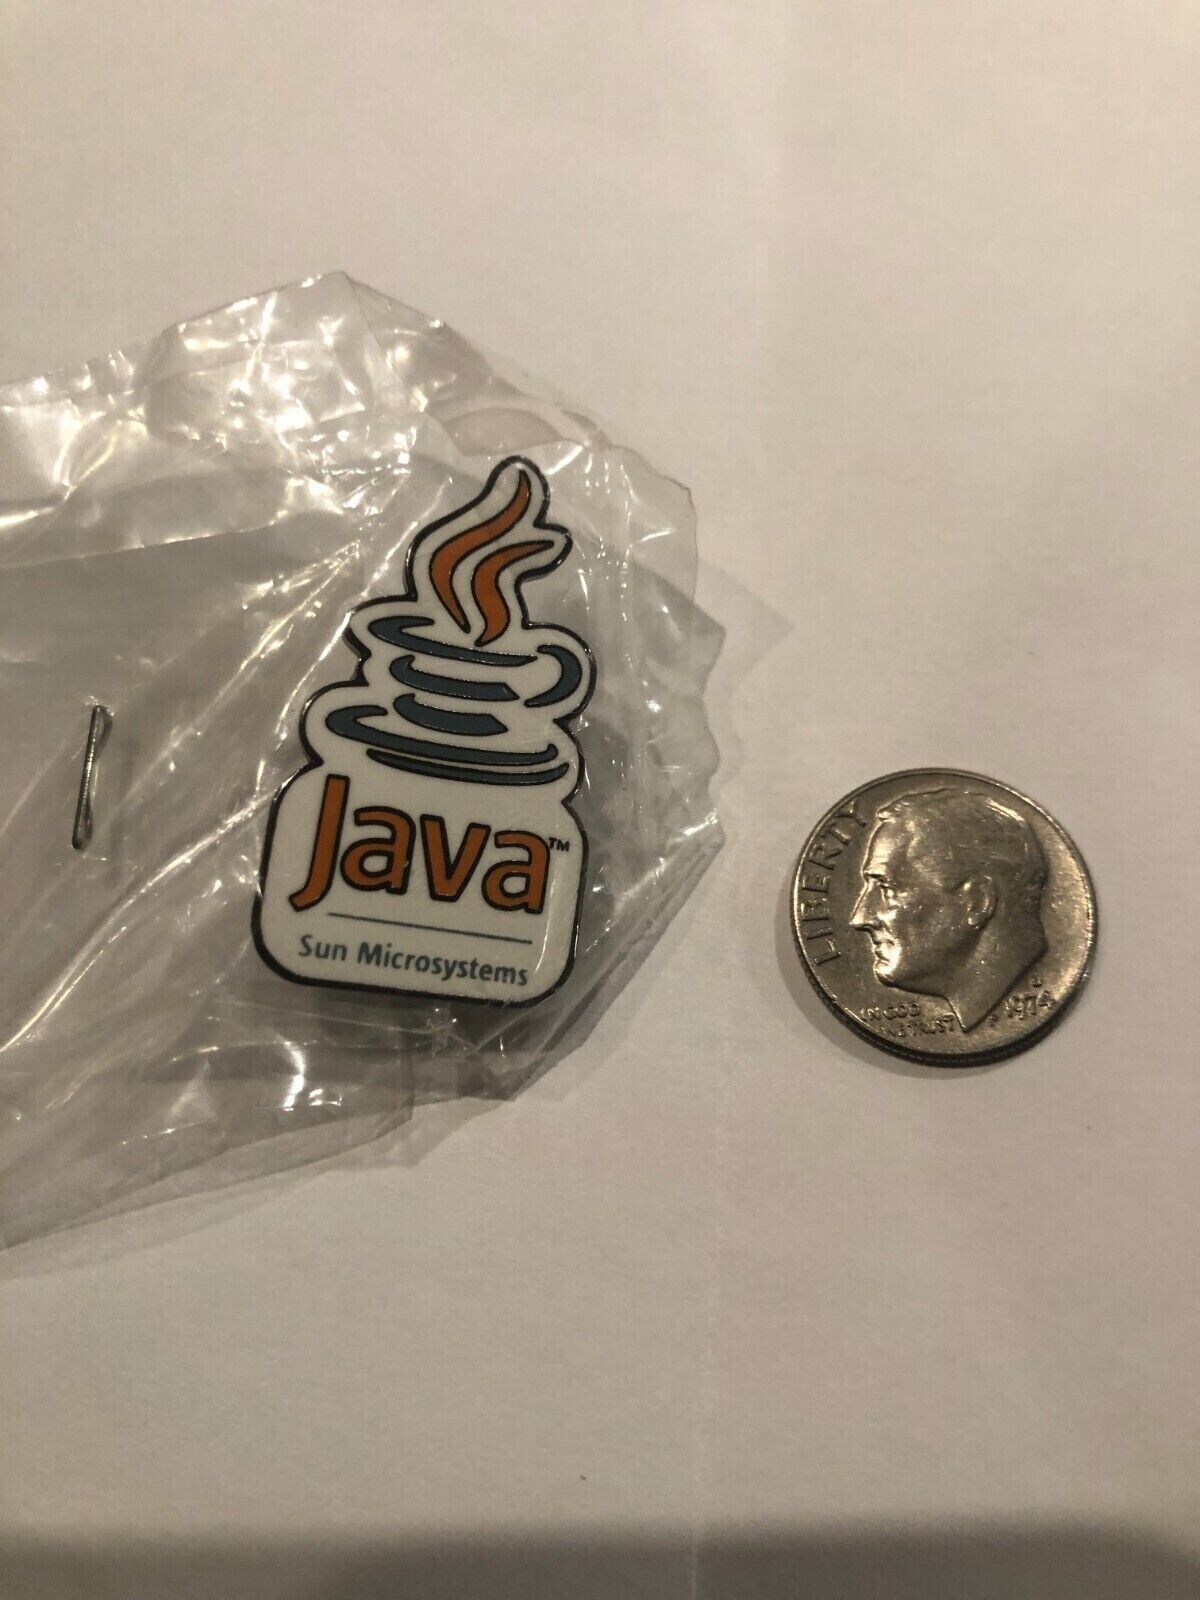 NEW vintage Sun Microsystems Java pin